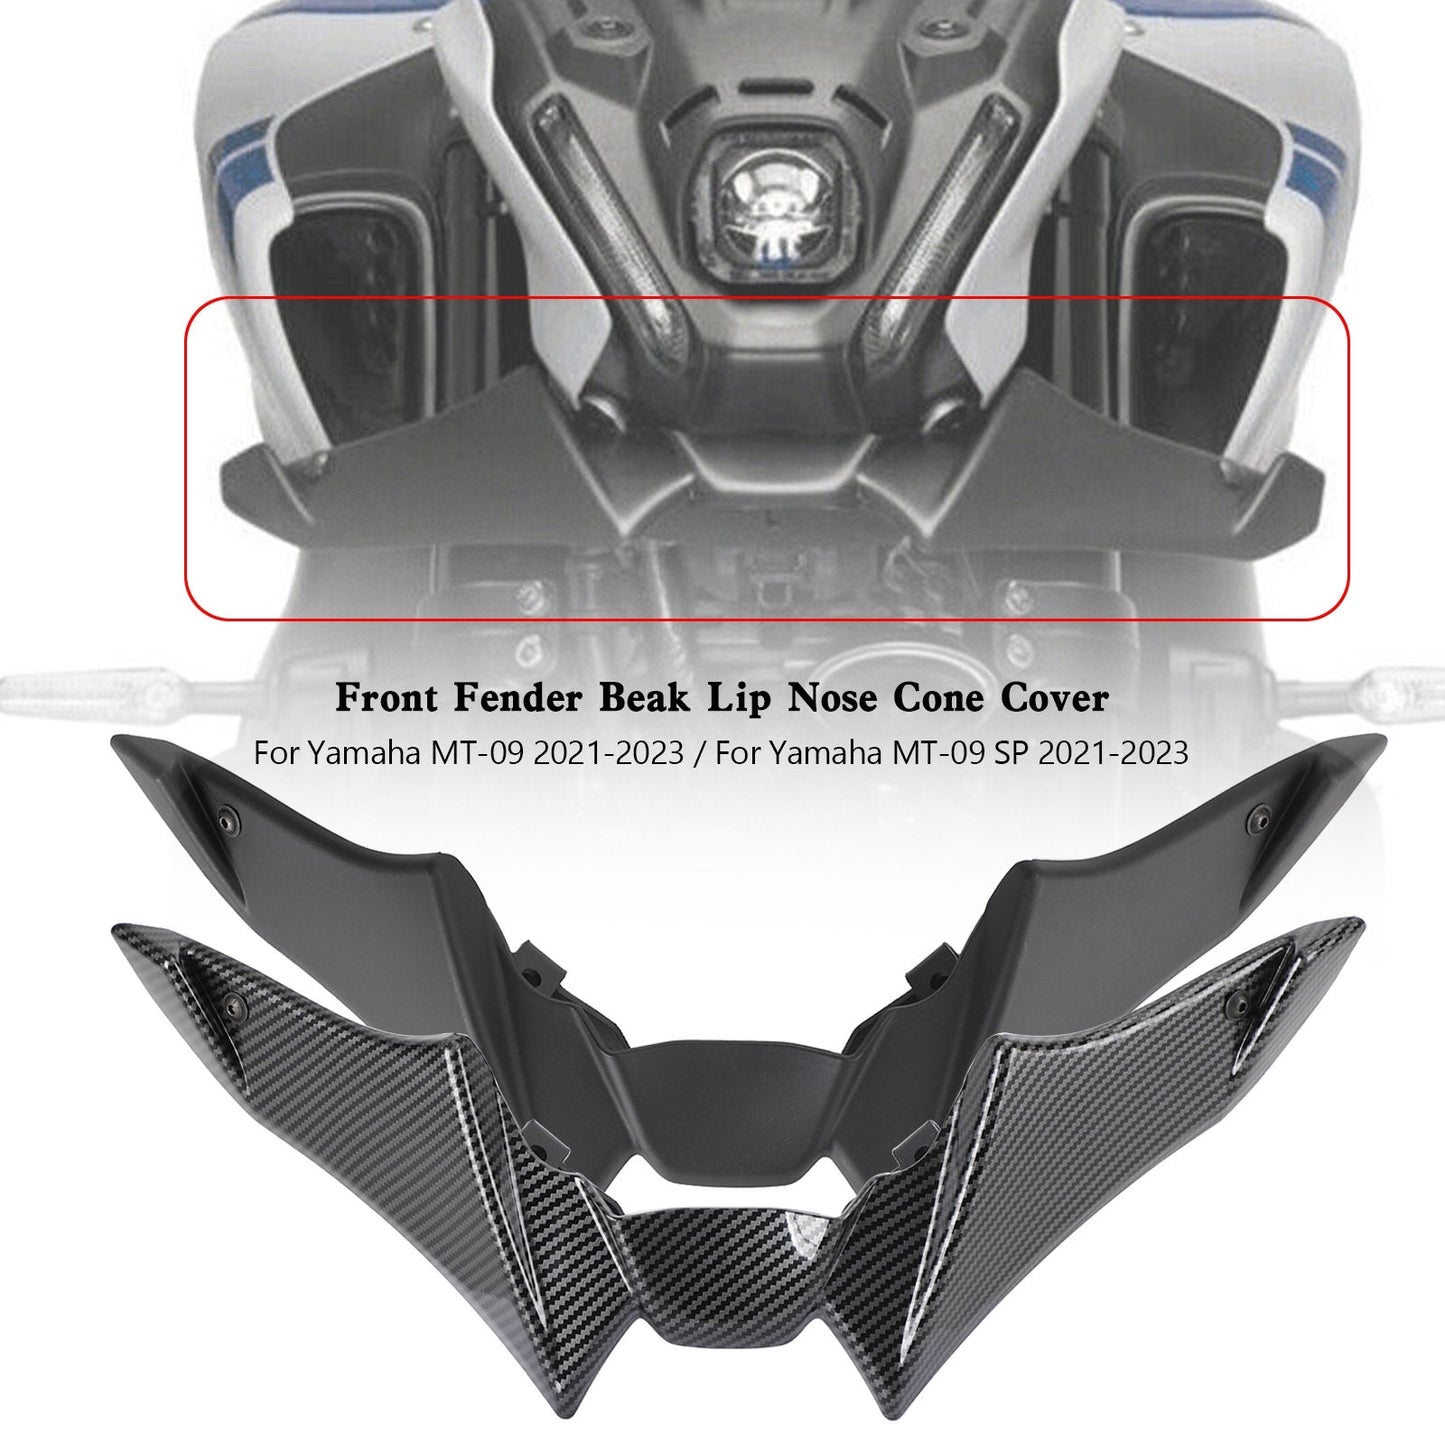 Yamaha MT-09 (SP) 2021-2023 Front Fender Beak Lip Nose Cone Cover Spoiler